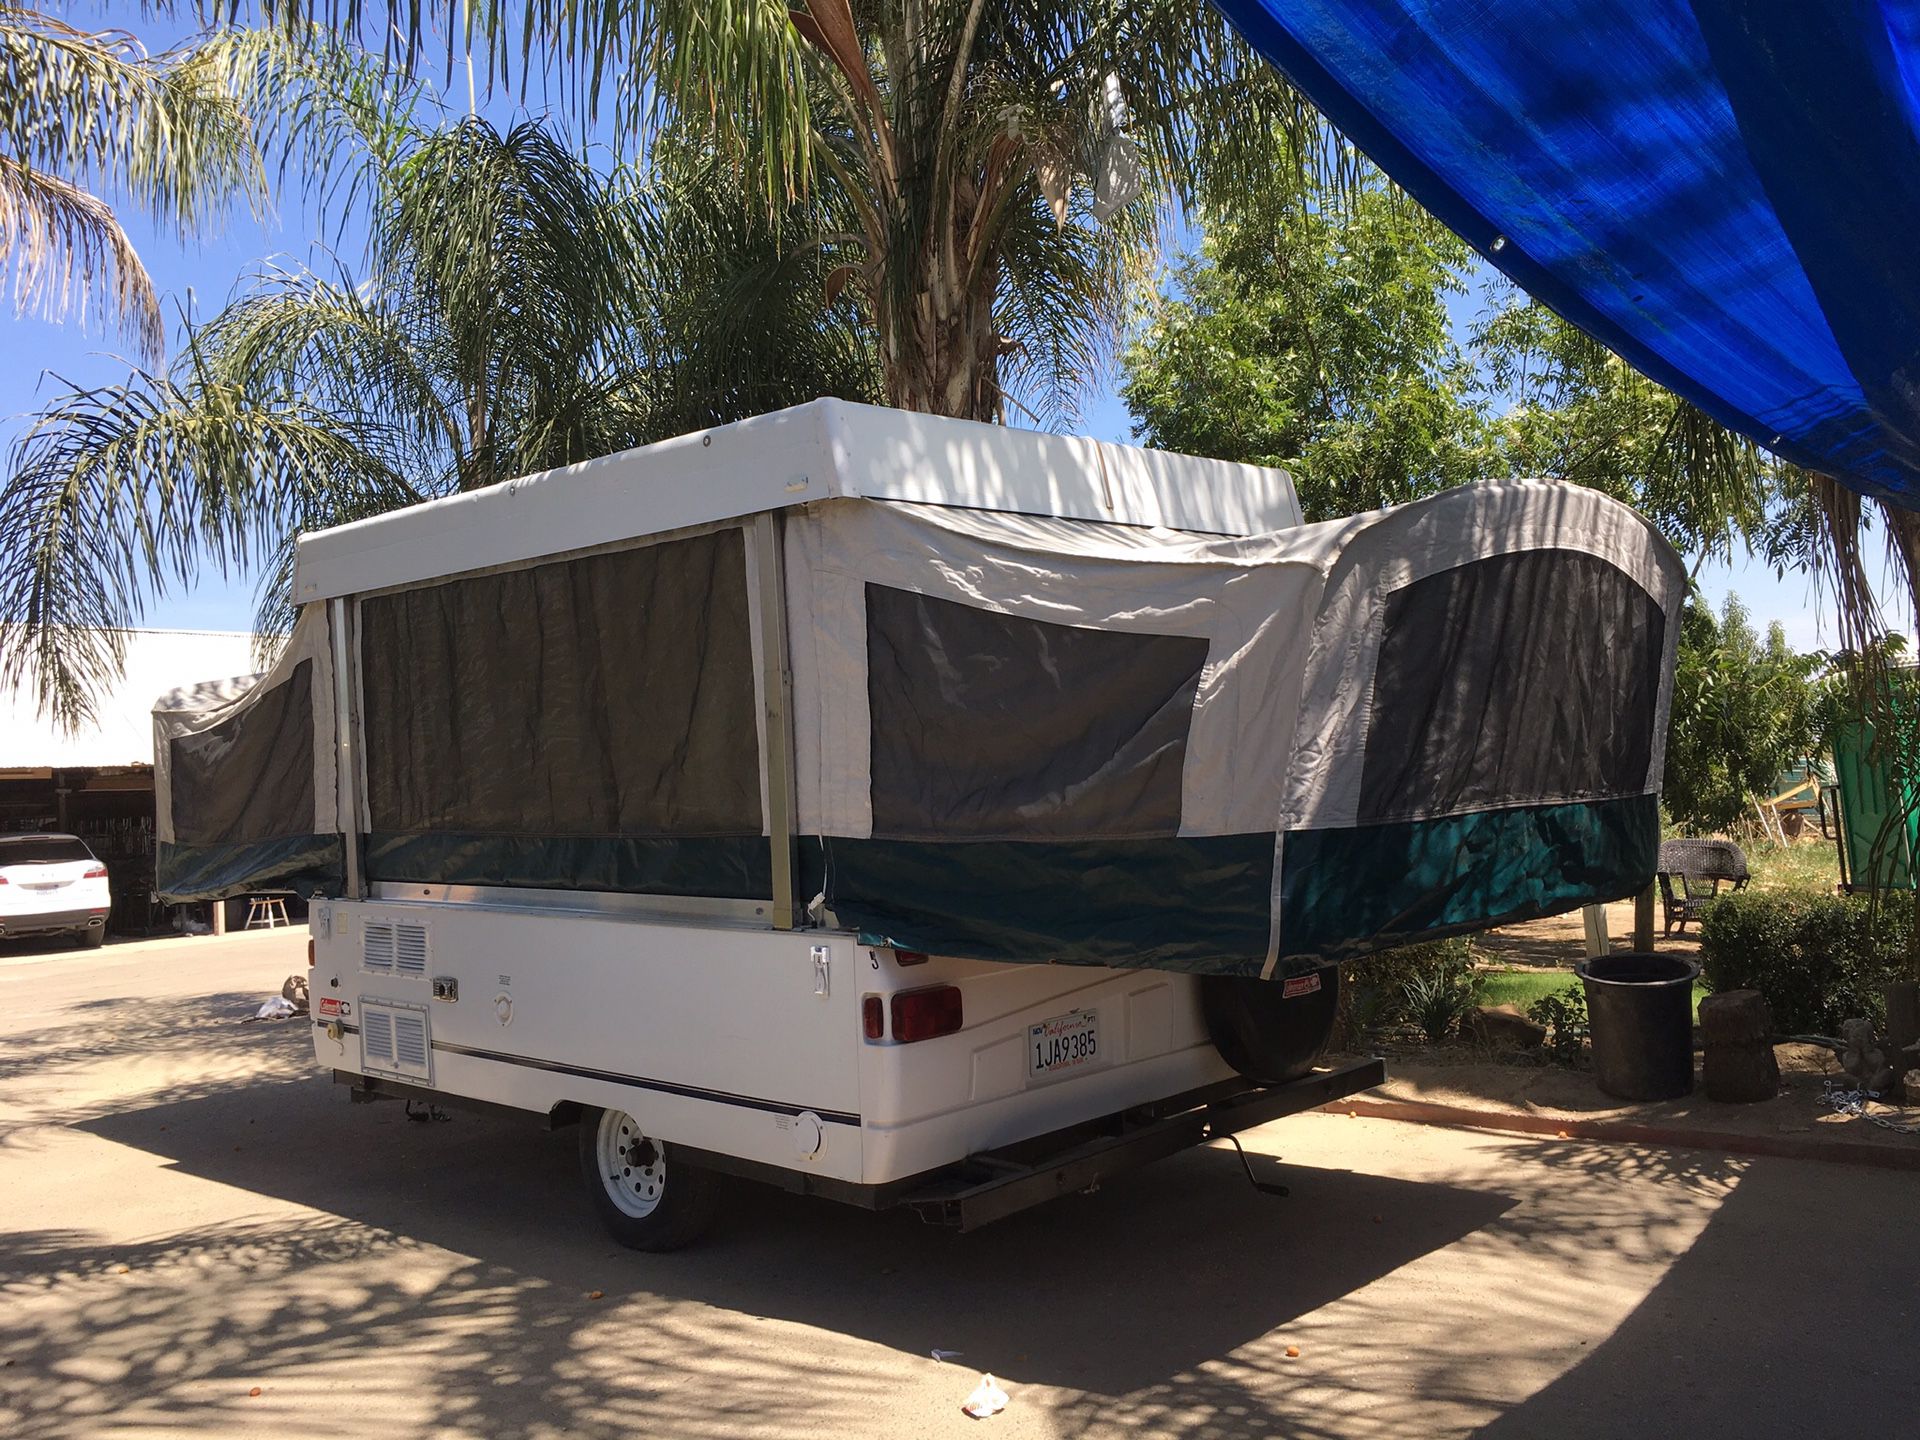 Coleman pop up trailer/ camper RV